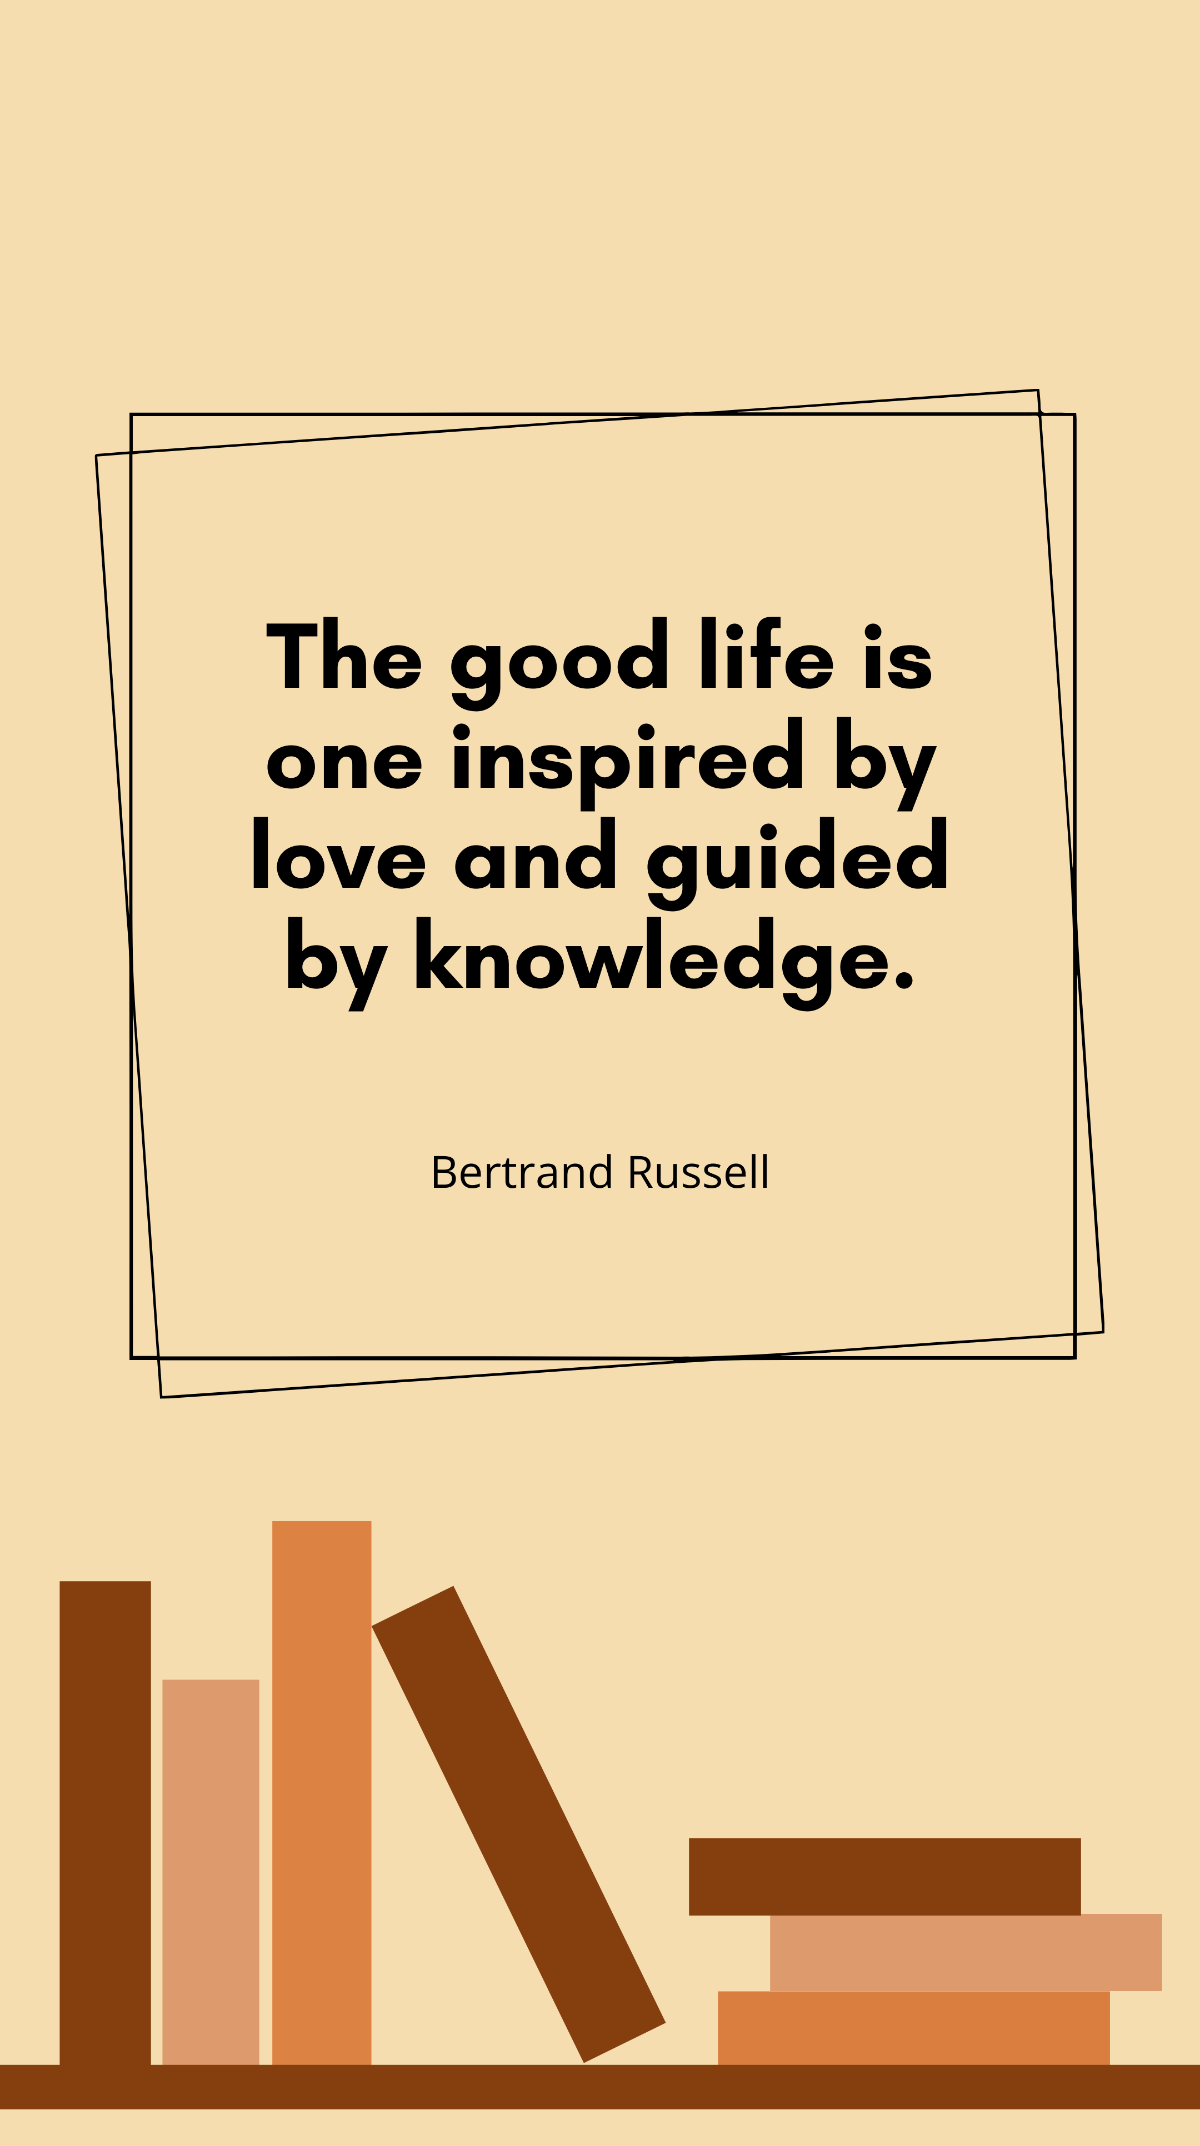 Bertrand Russell - 